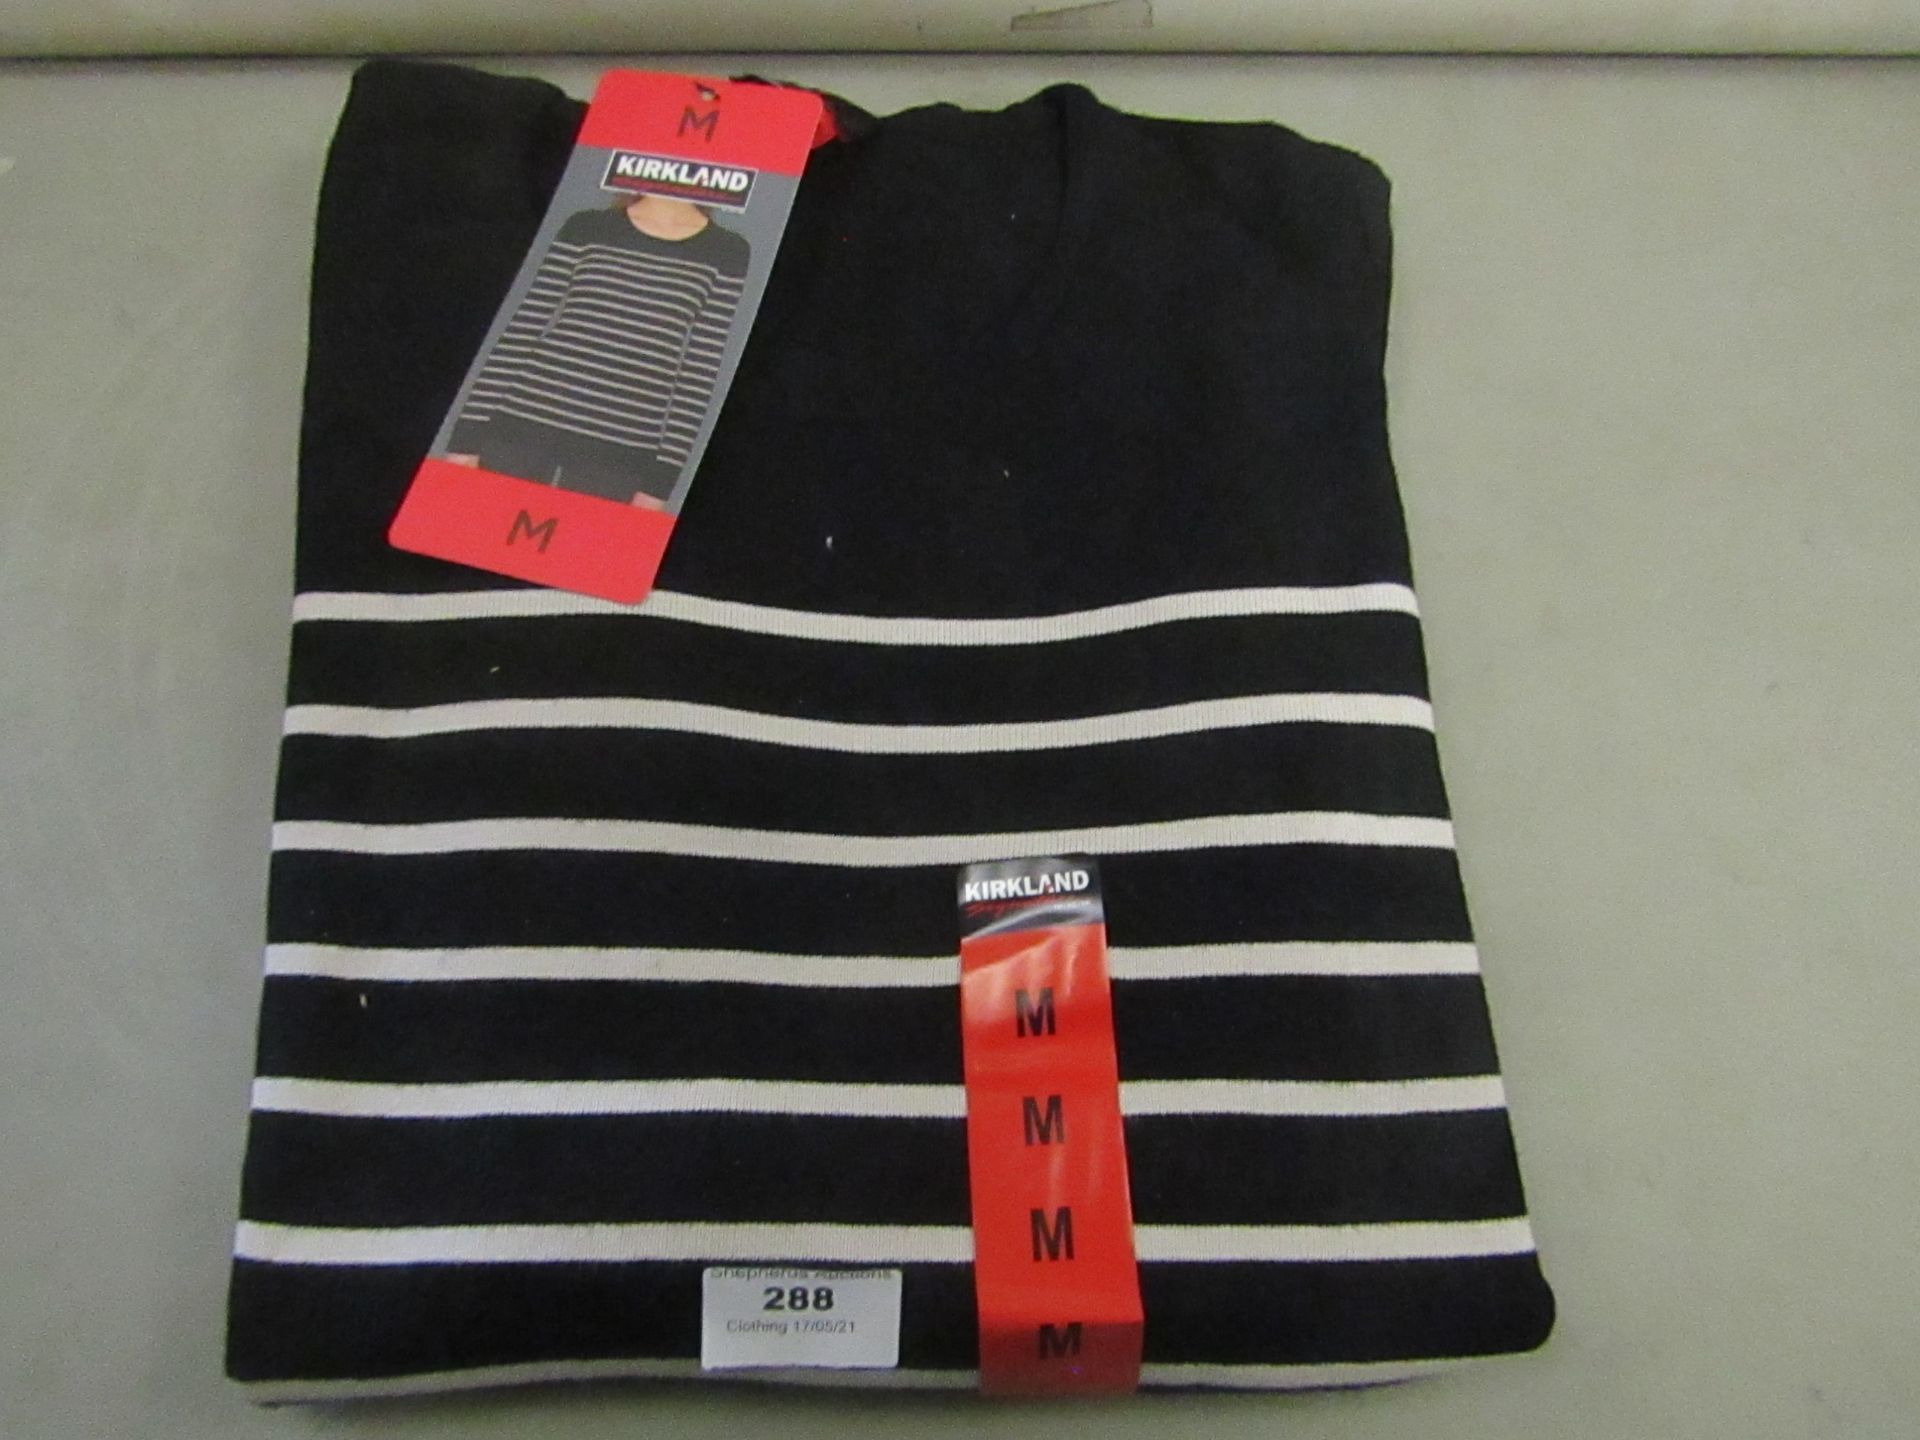 Kirkland Signature Ladies Crewneck Sweater Navy/Cream Stripe Size M New With Tags